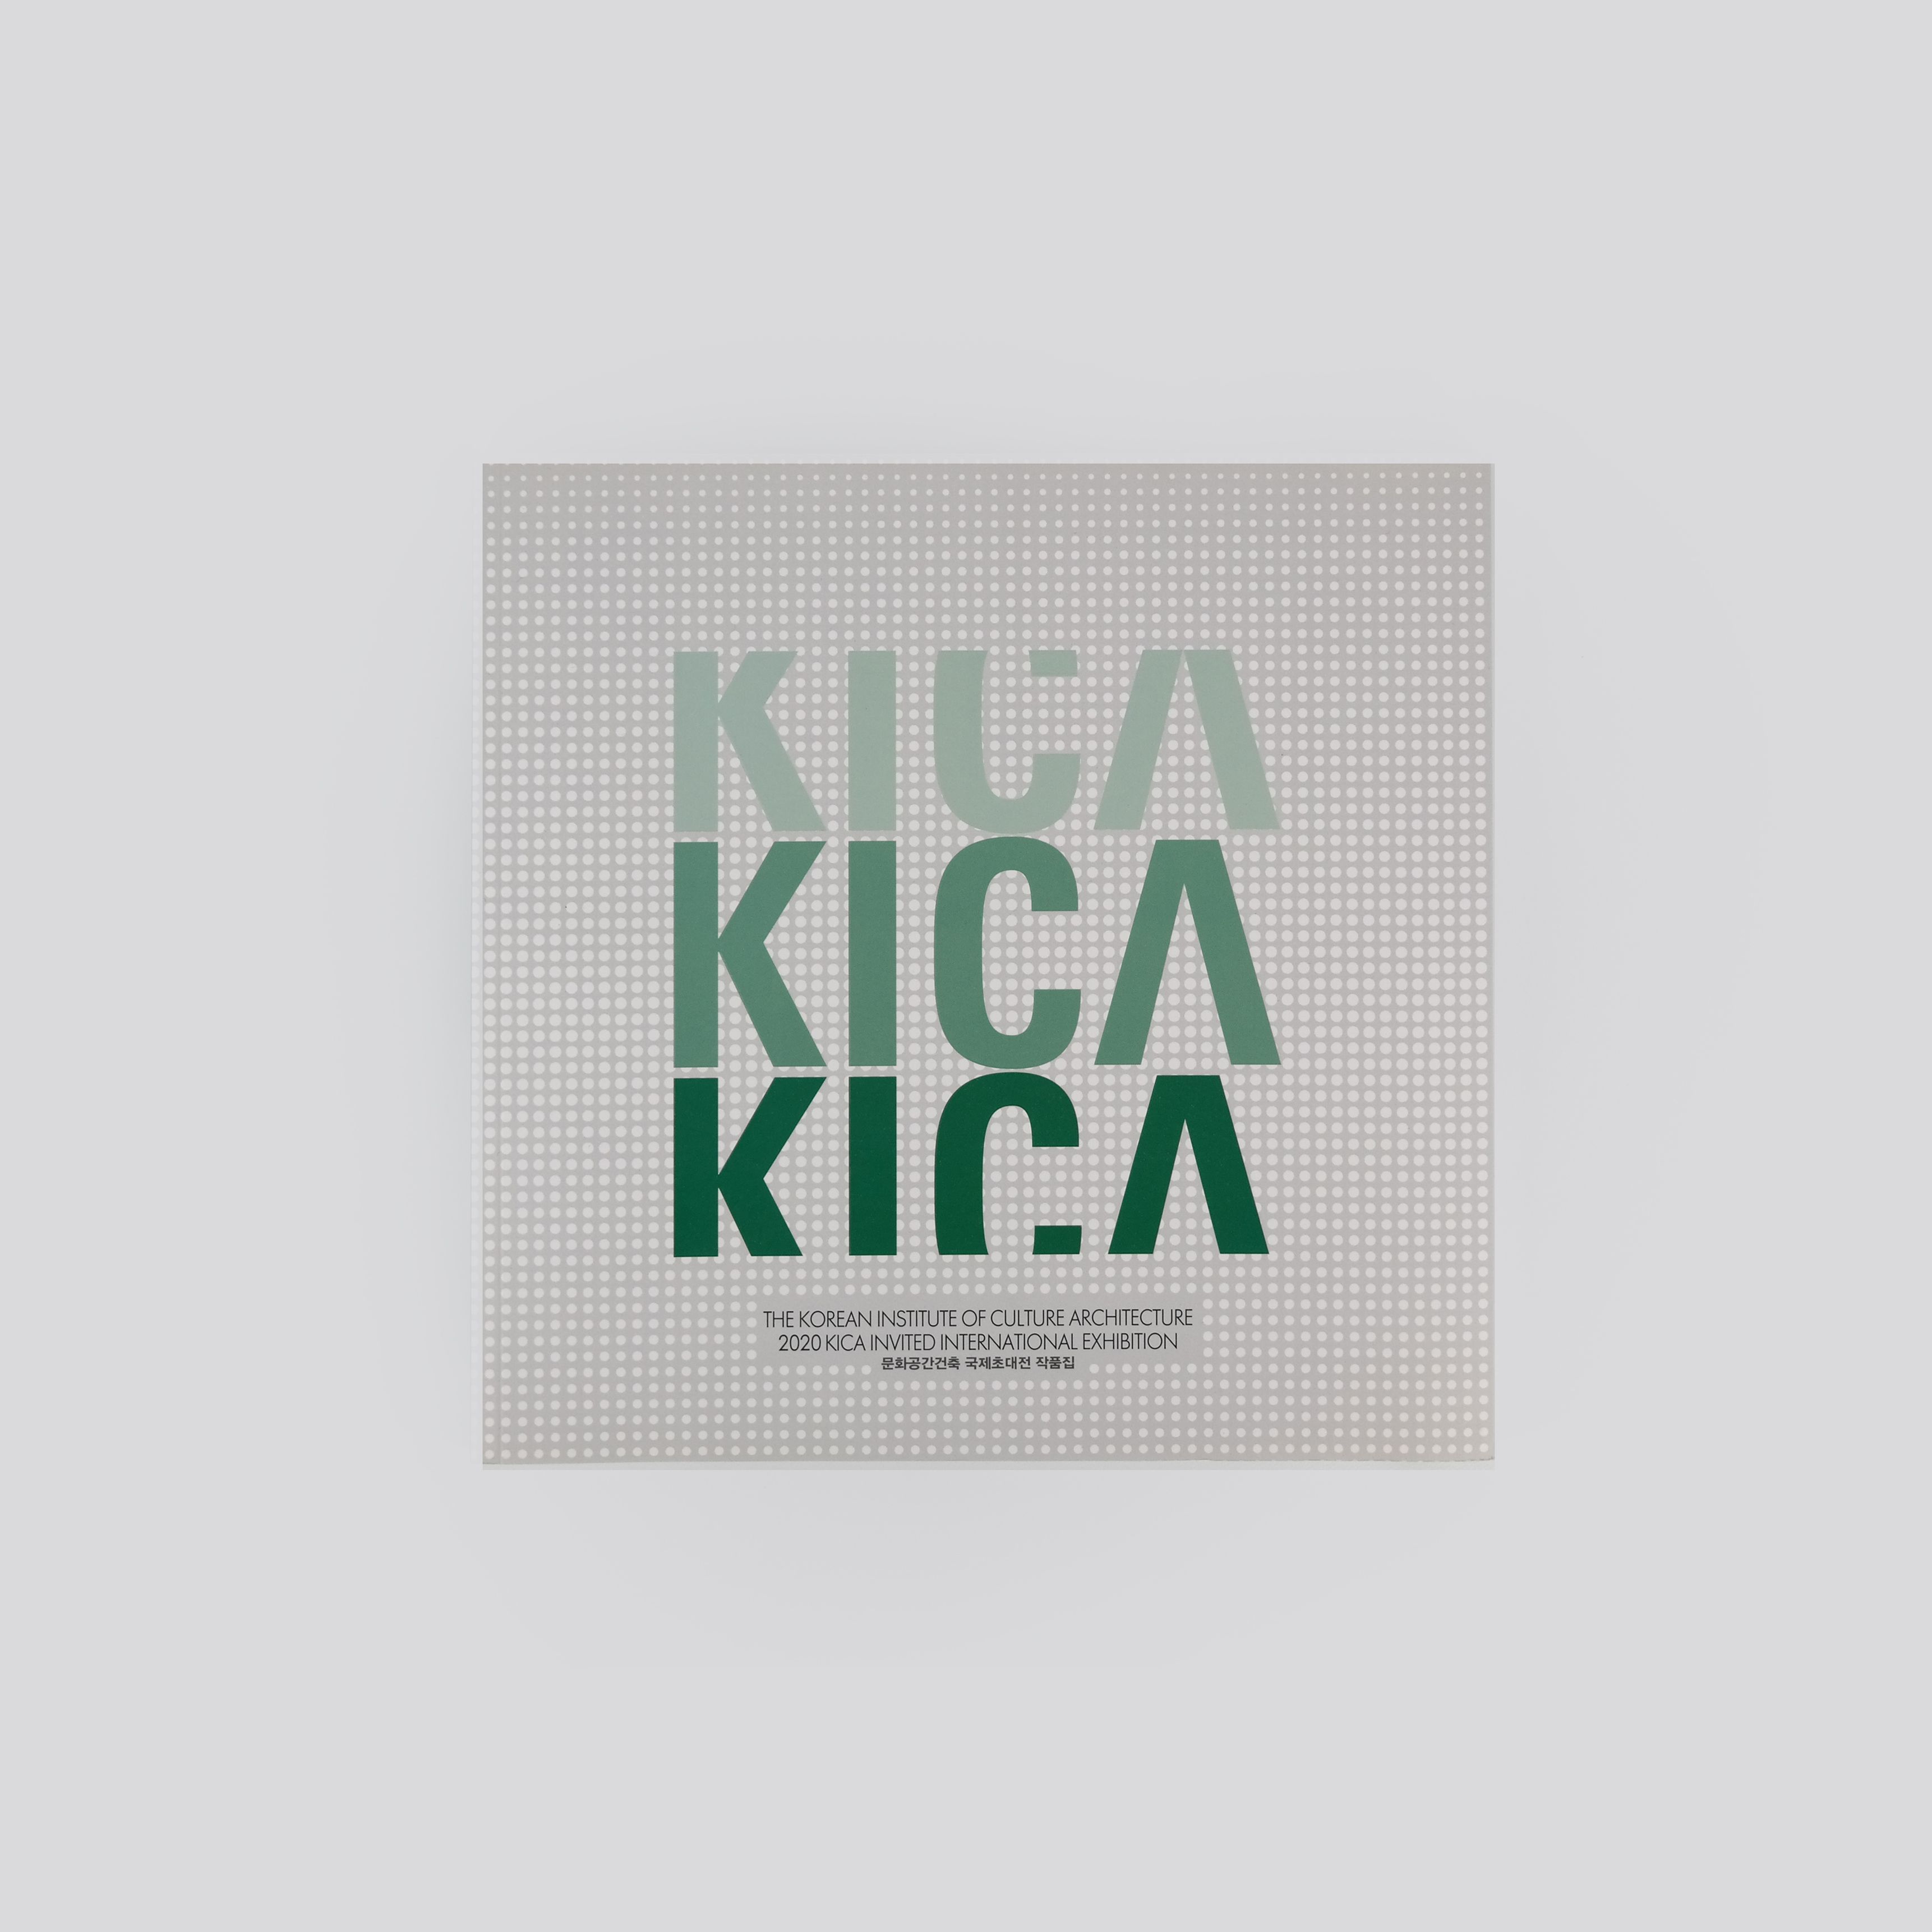 The Korean Institute of Culture Architecture 2012 KICA Invited International Exhibition